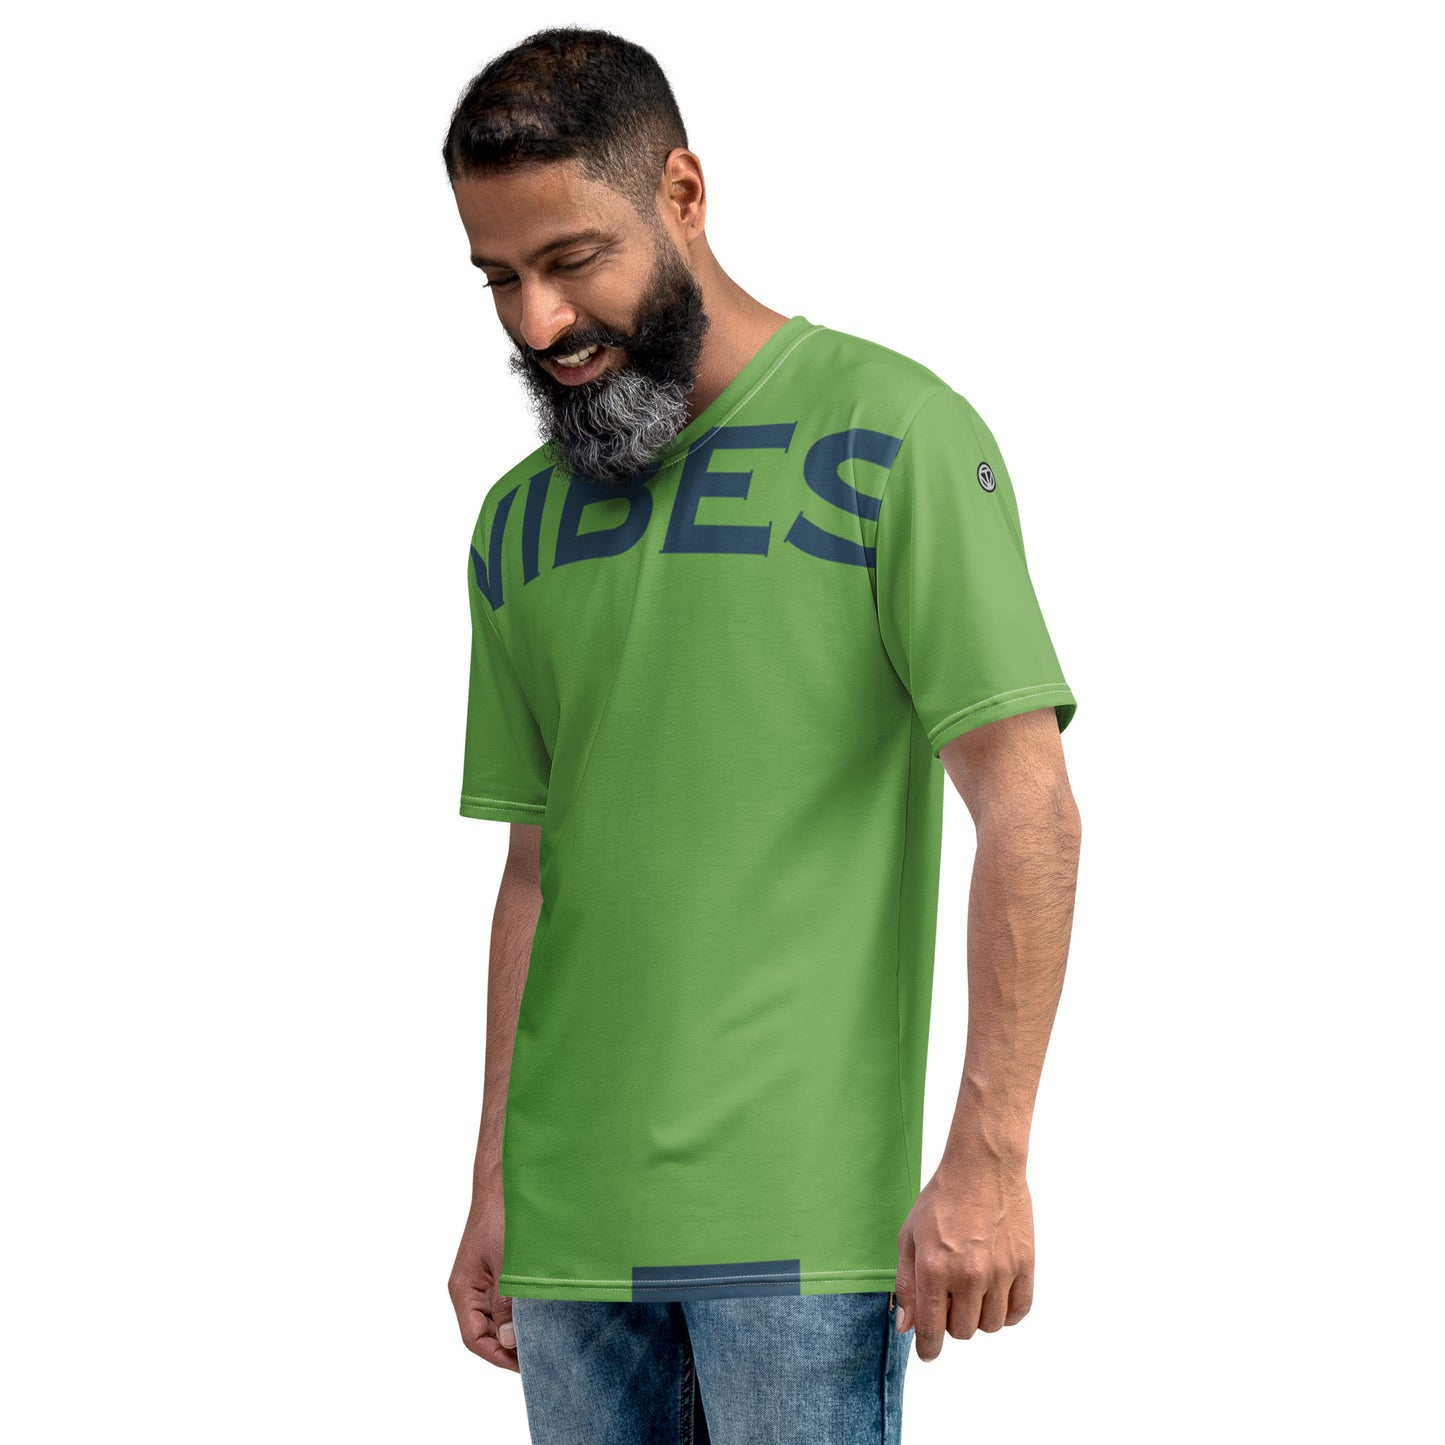 TIME OF VIBES - Premium Men's T-Shirt VIBES (Green/Arapawa) - €49.00